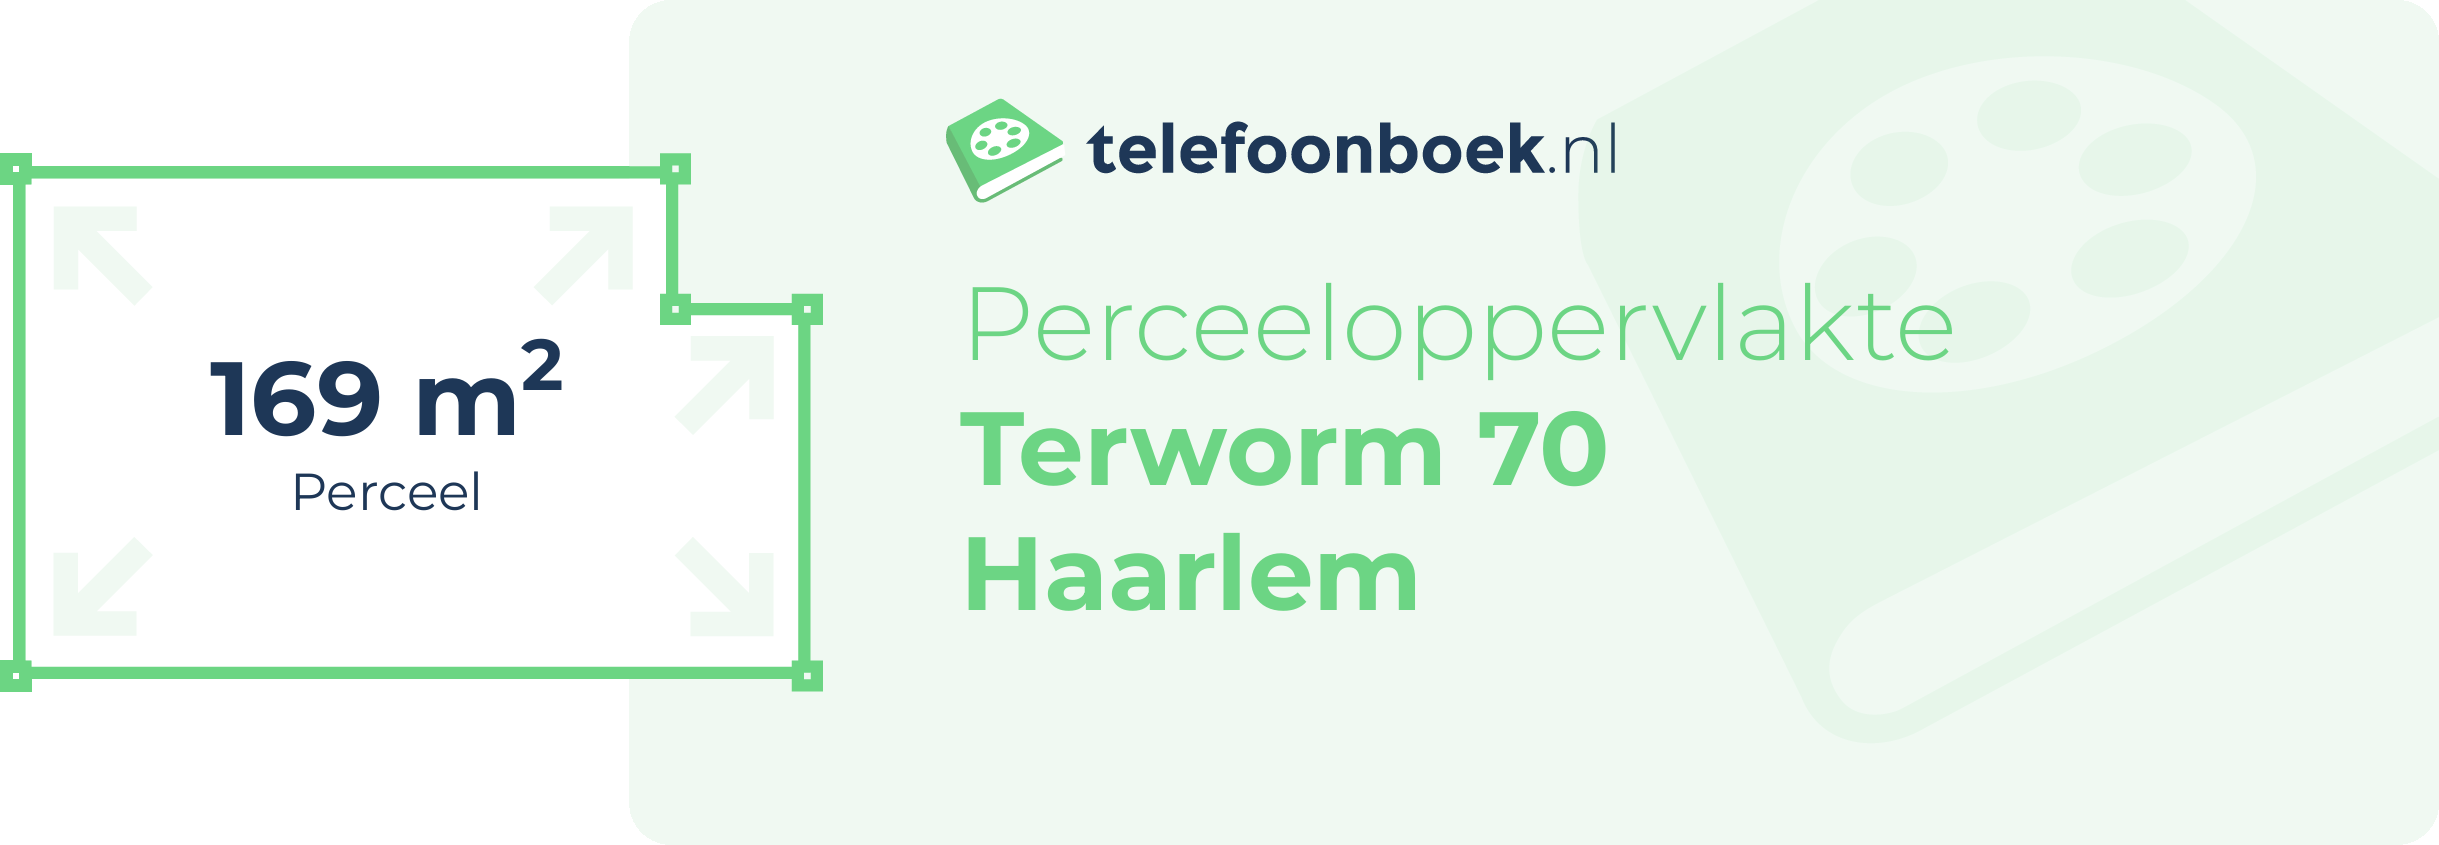 Perceeloppervlakte Terworm 70 Haarlem